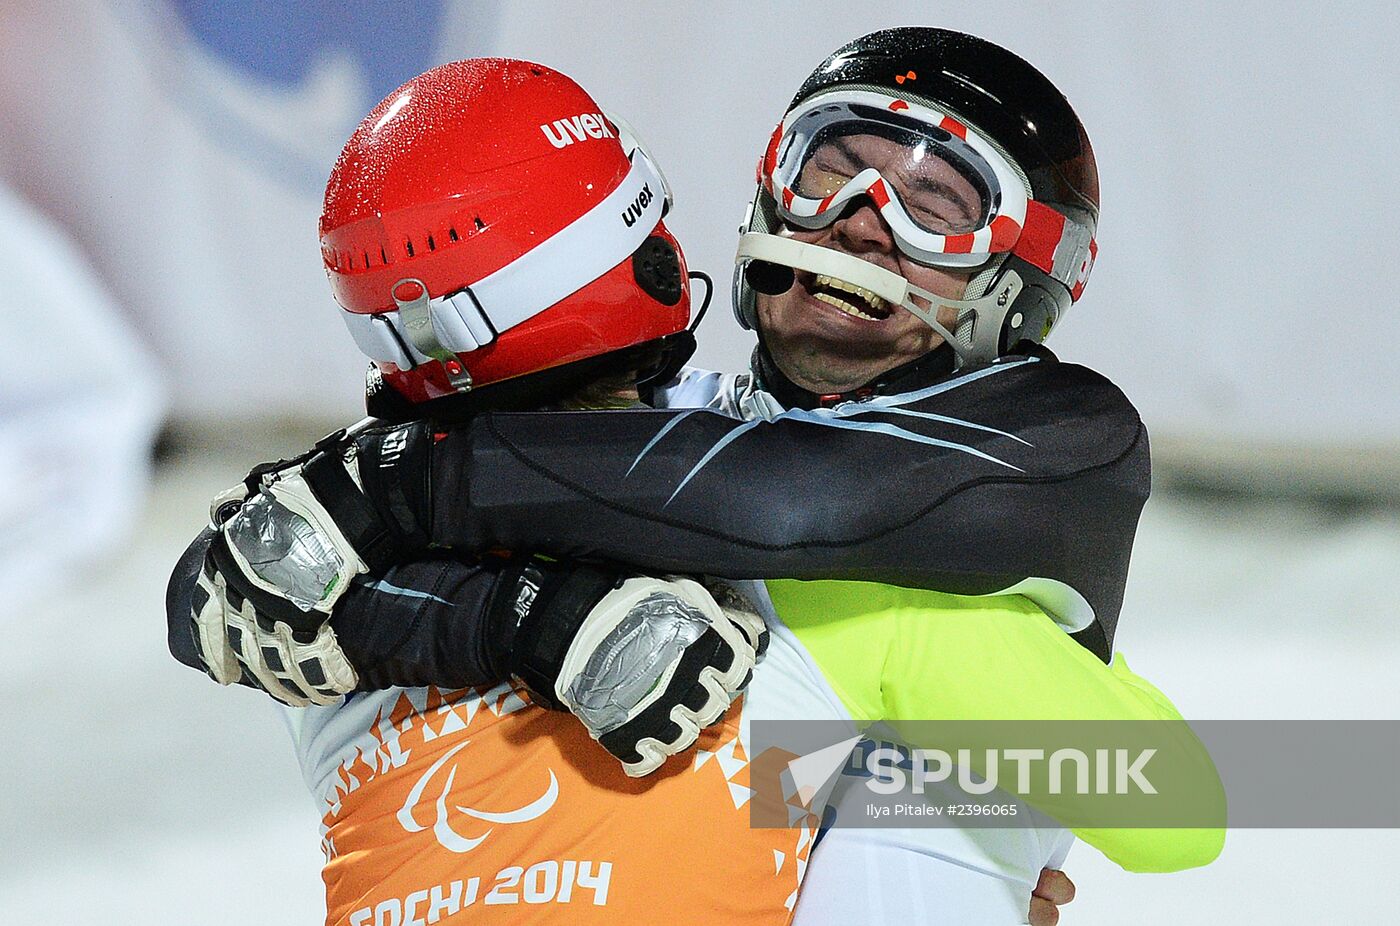 2014 Winter Paralympics. Alpine skiing. Men. Slalom